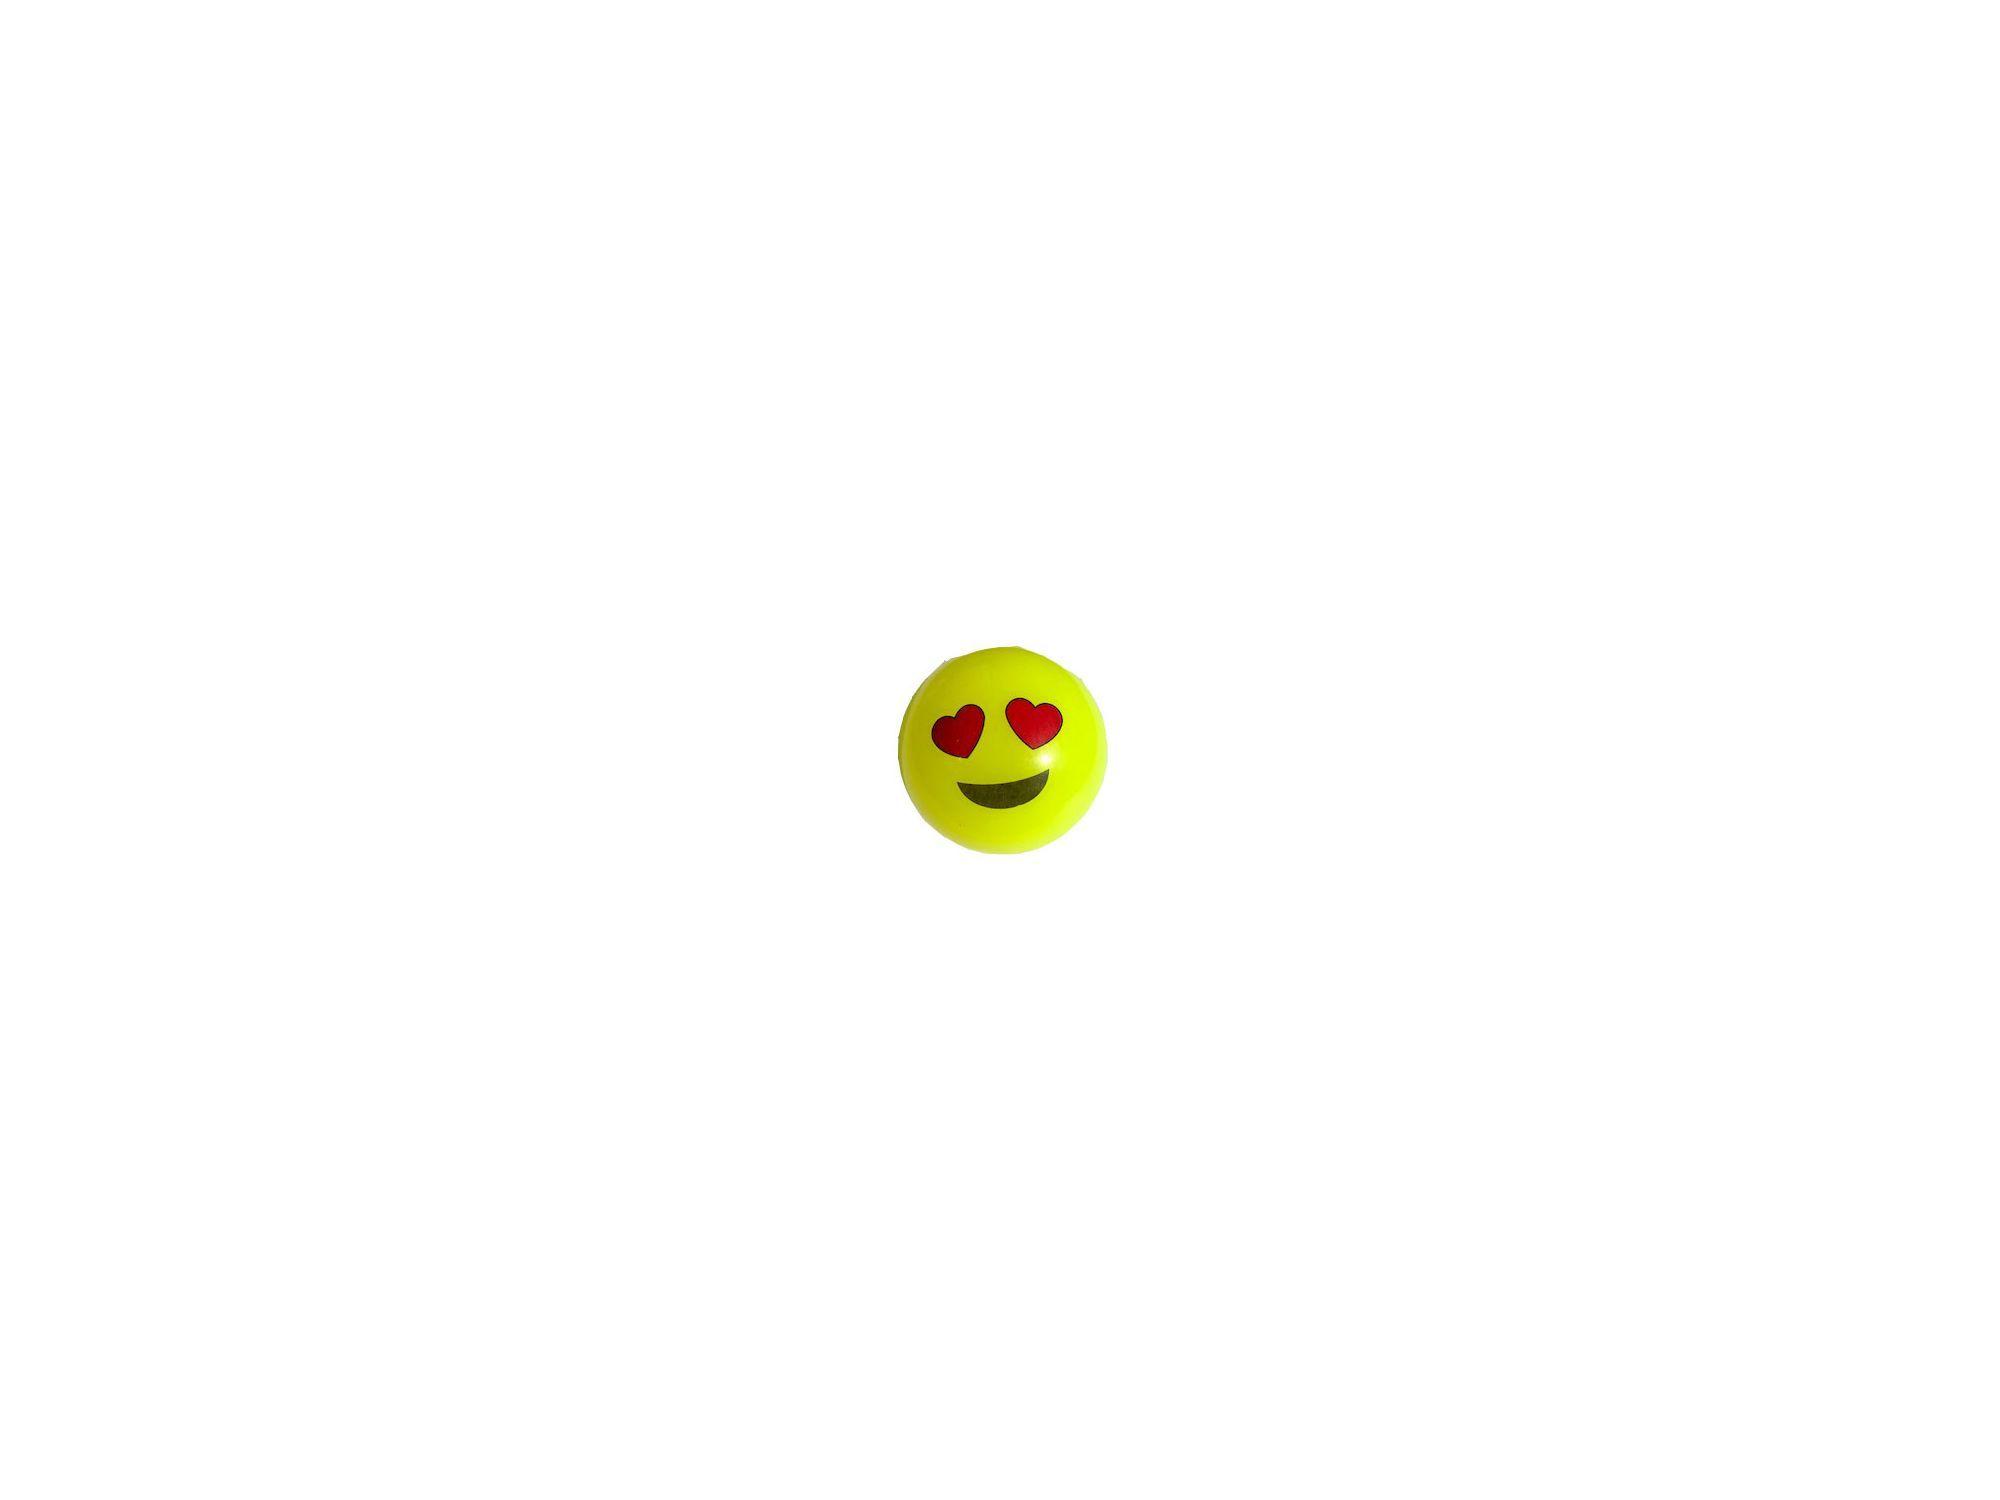 Eyes Emoji Logo - Buy the Mercian Love Eyes Emoji Soft Ball. Next Day Delivery and 0